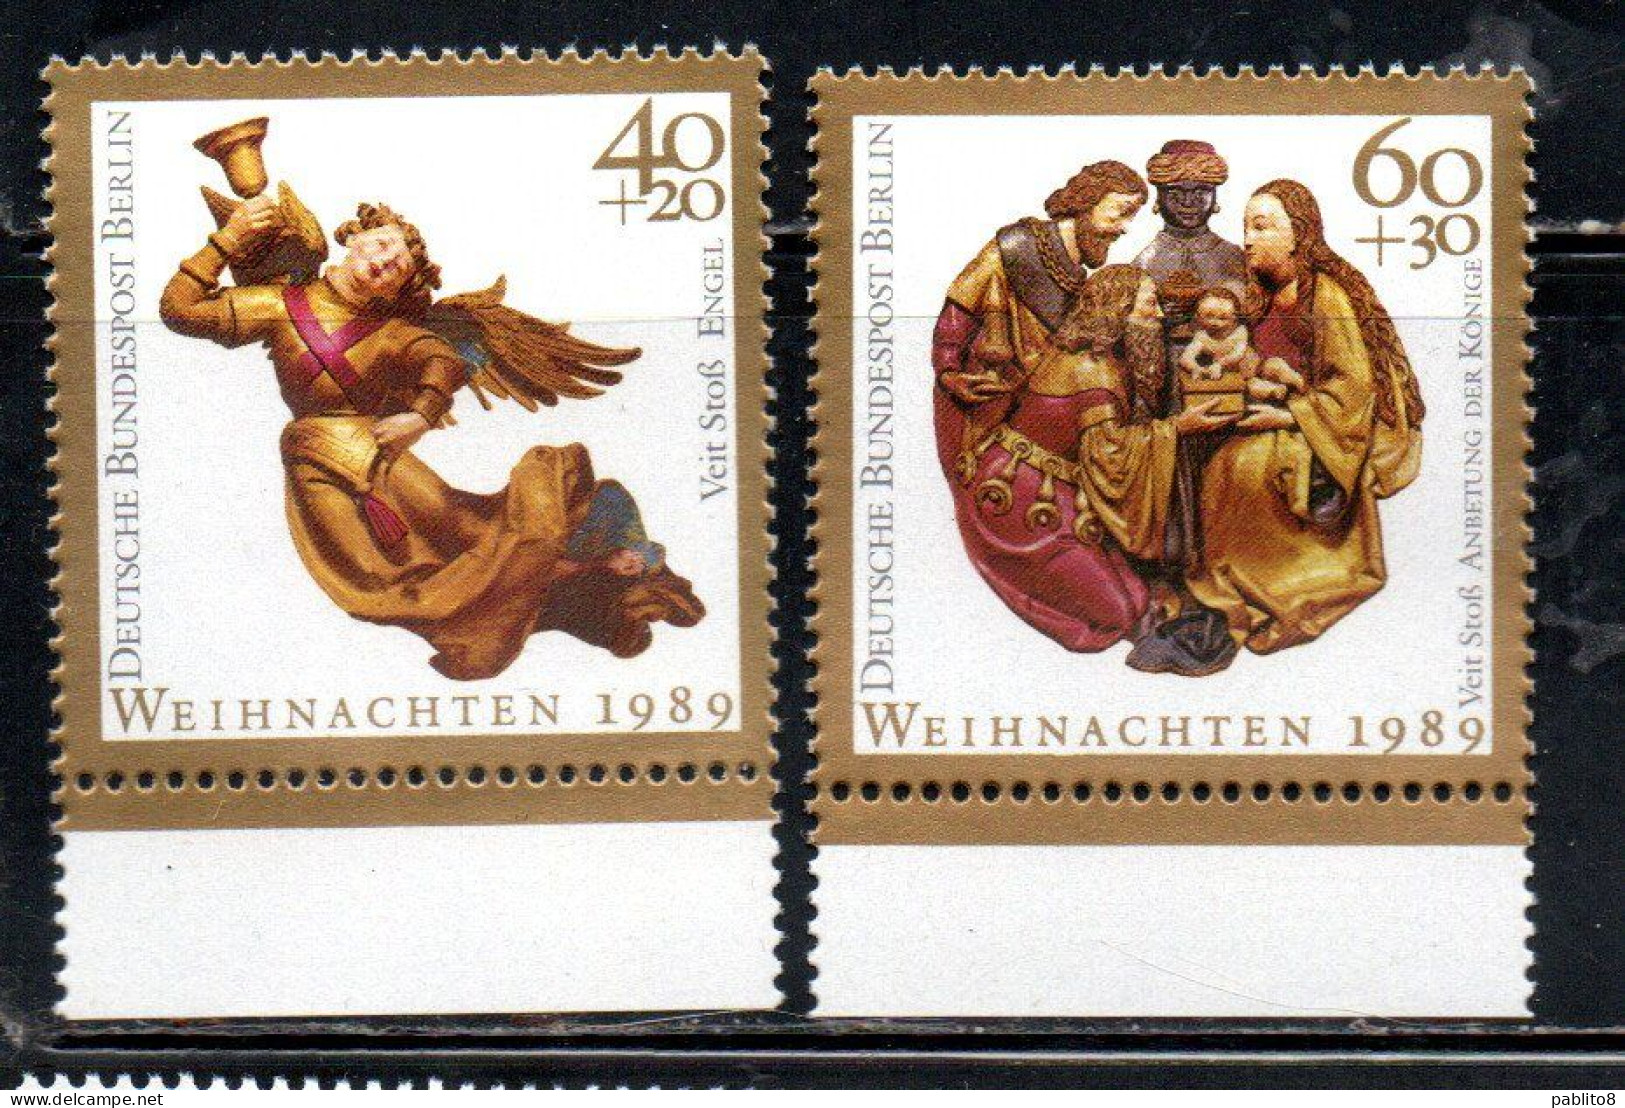 GERMANY  GERMANIA BERLIN BERLINO 1989 CHRISTMAS NATALE WEIHNACHTEN NOEL NAVIDAD NATAL COMPLETE SET SERIE COMPLETA MNH - Neufs